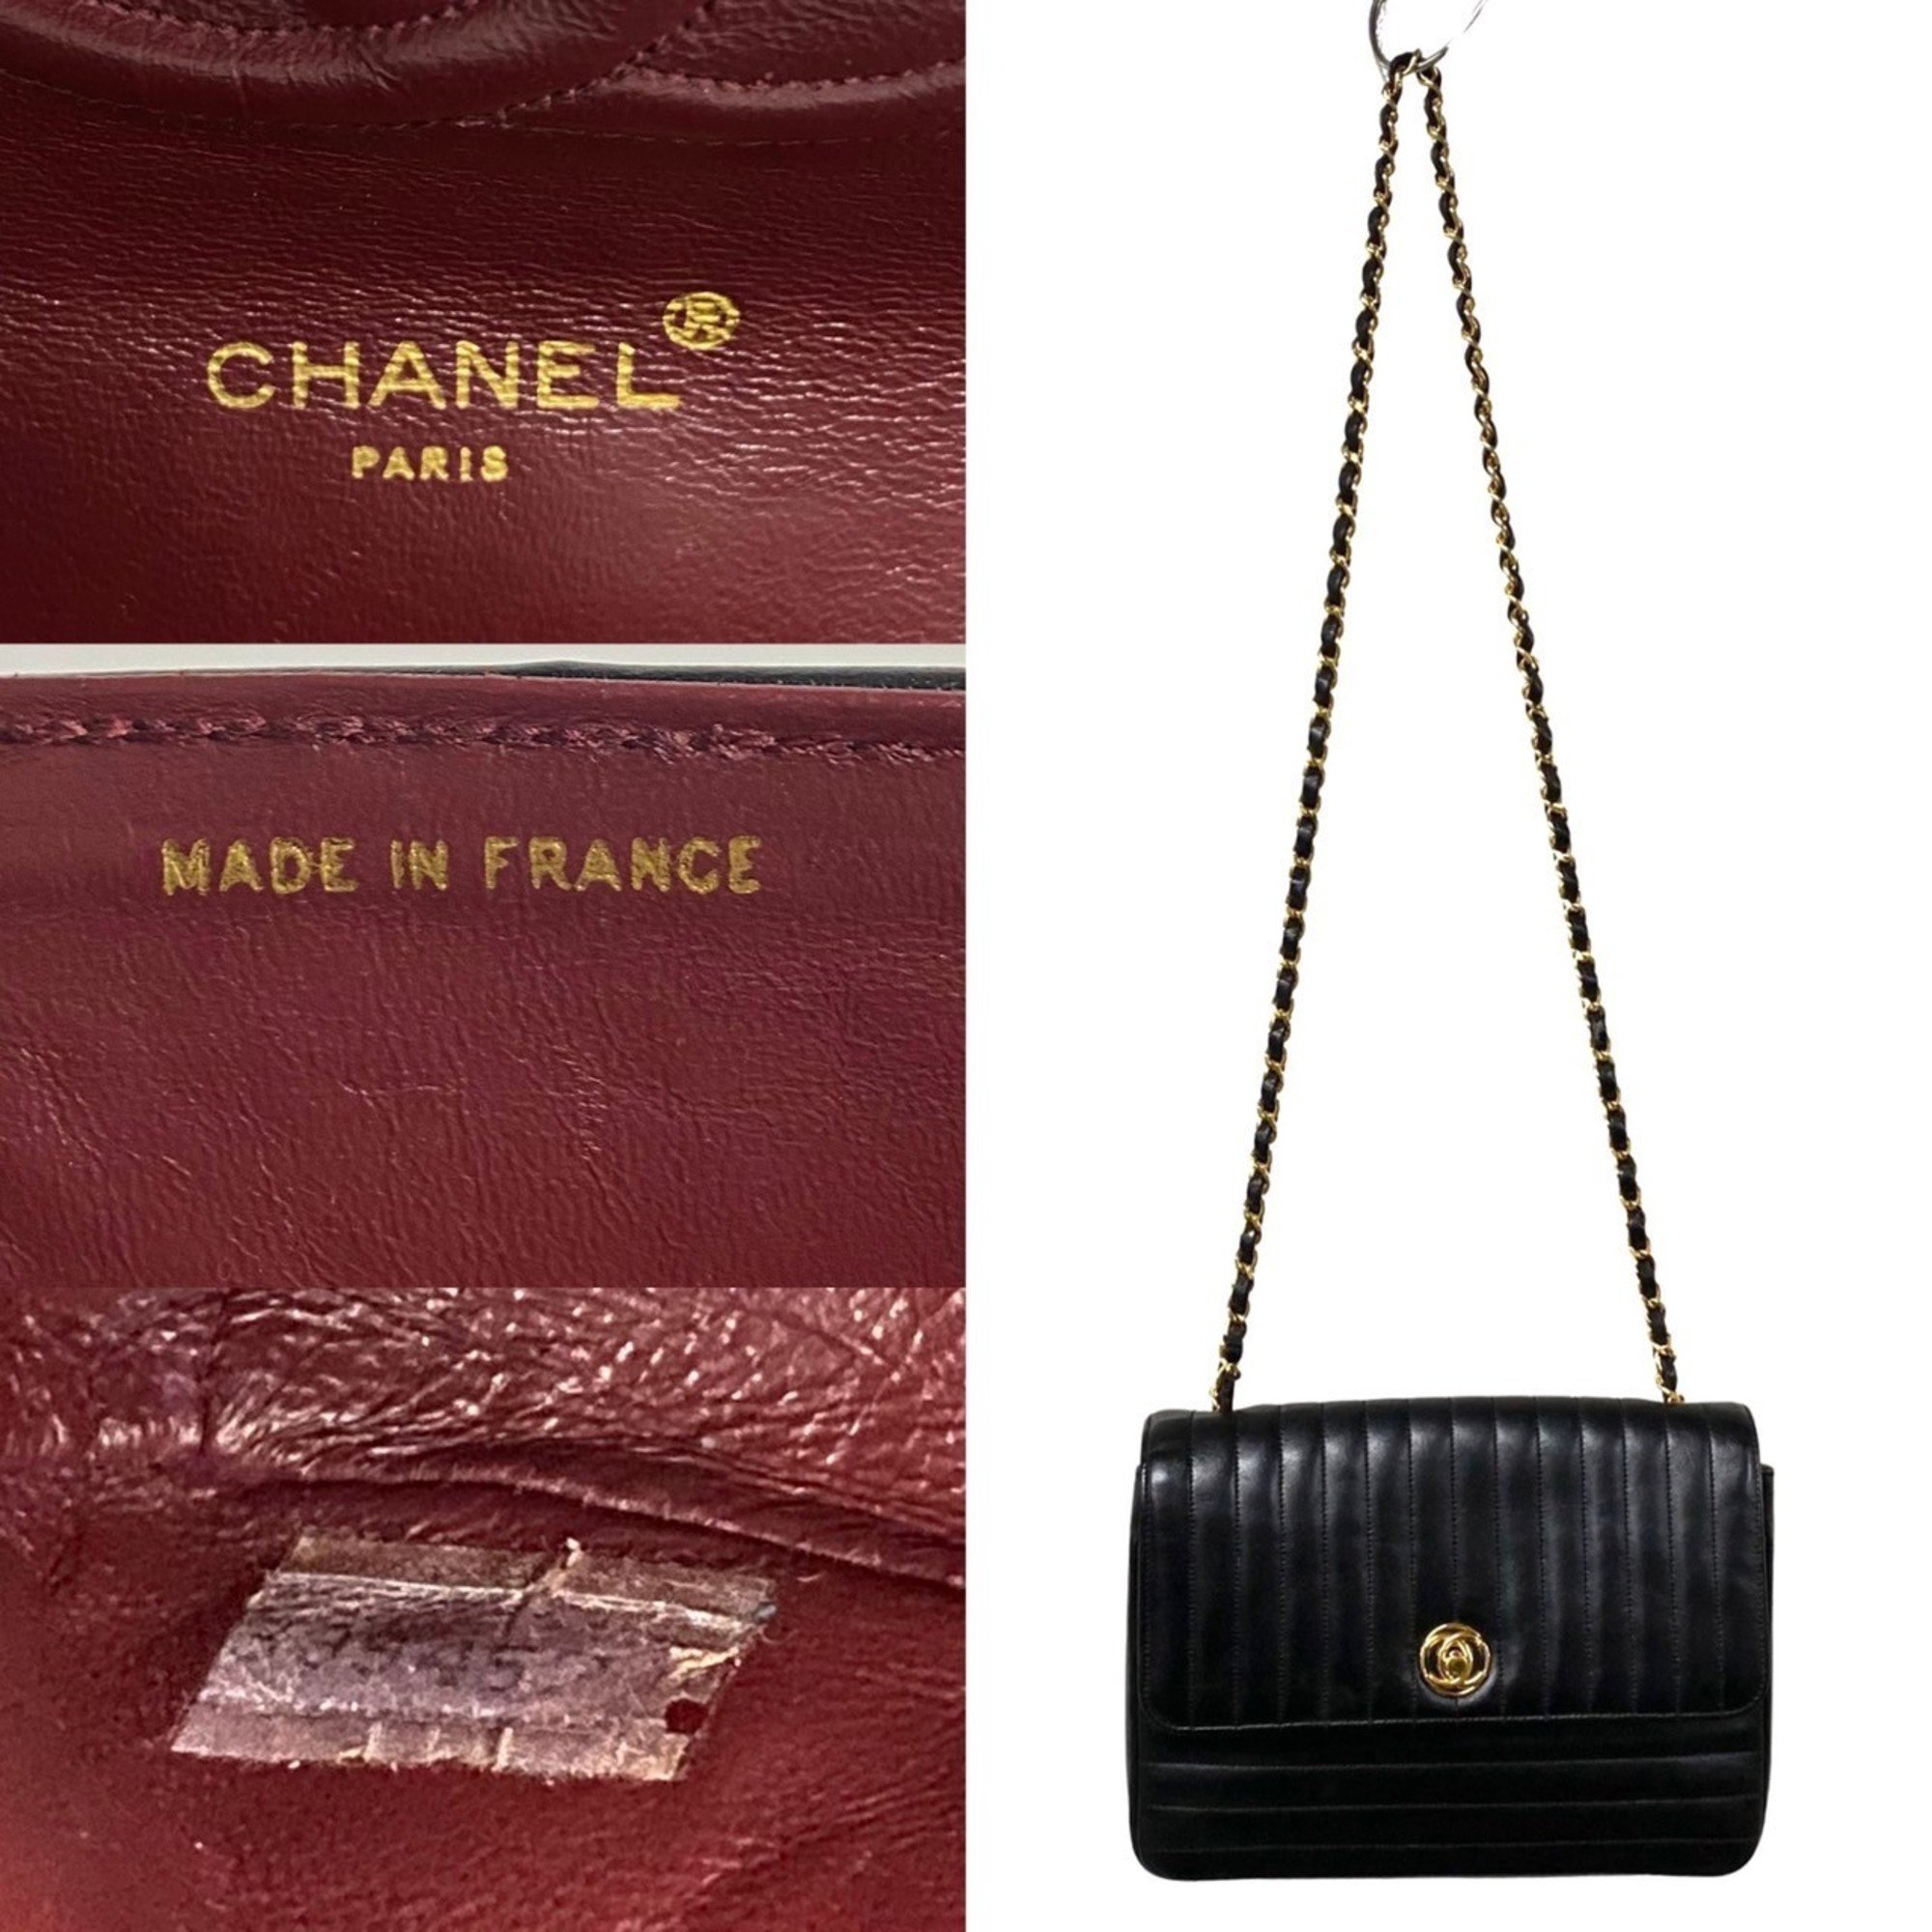 CHANEL Mademoiselle Coco Mark Lambskin Leather Chain Shoulder Bag Black 90074